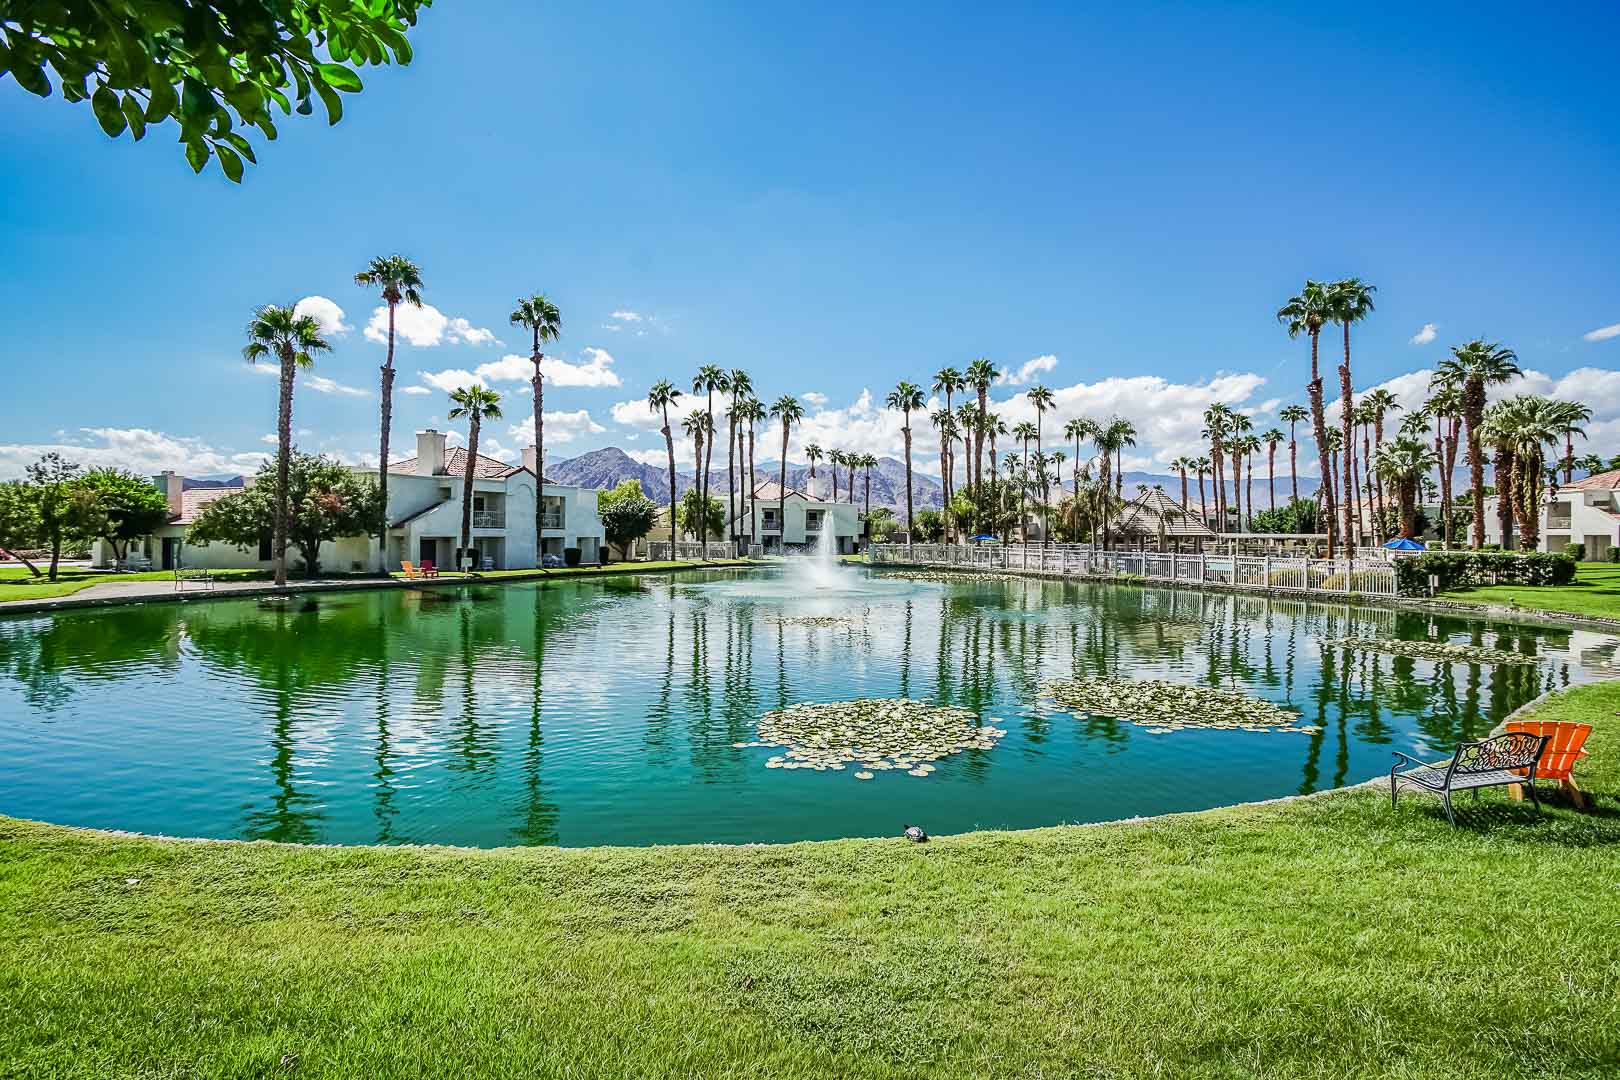 A peaceful view of the resort exterior at VRI Americas' Desert Breezes Resort in California